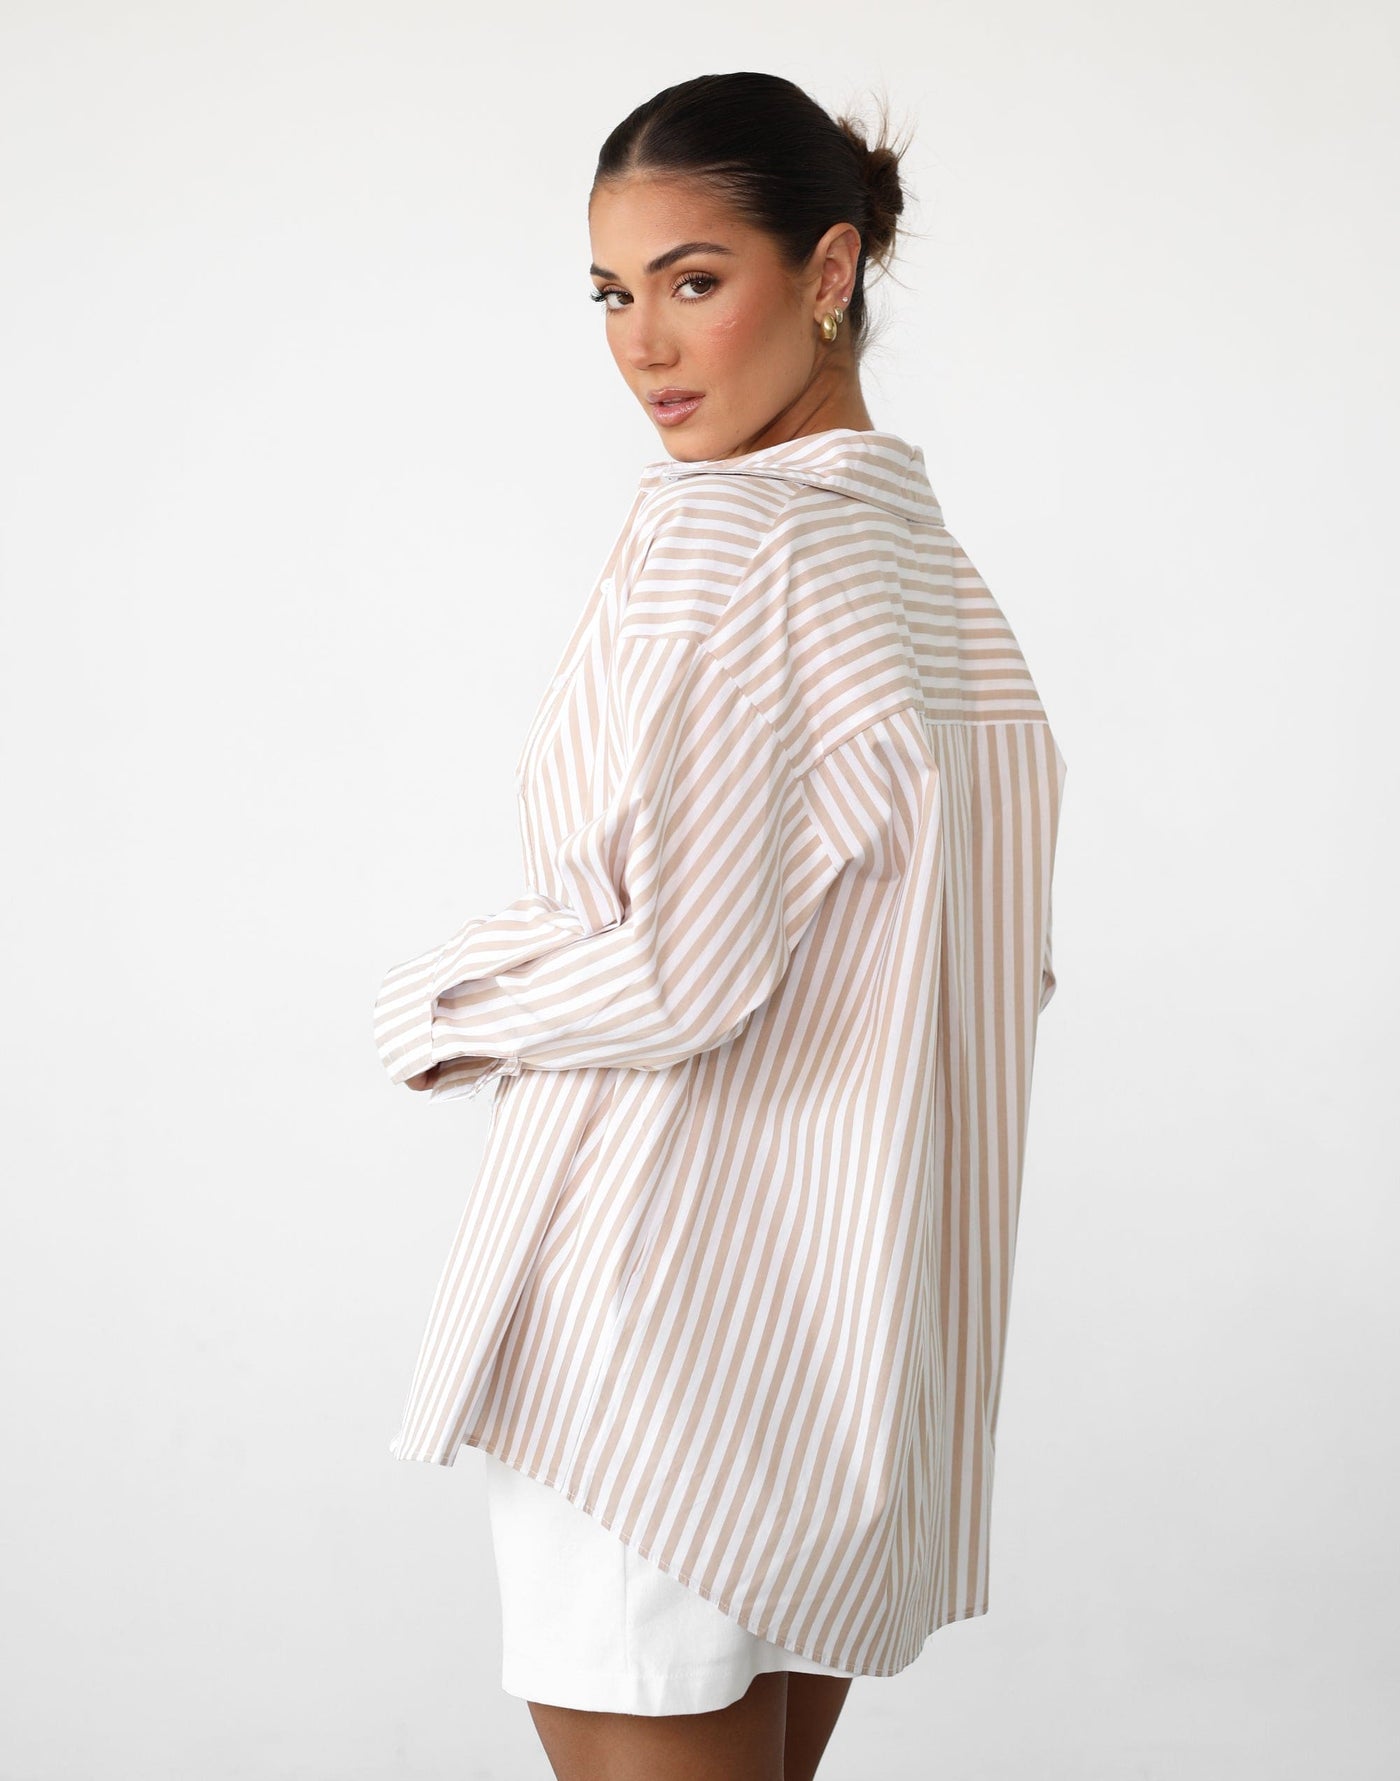 Deykotah Shirt (Beige Stripe) - Striped Long Sleeve Shirt - Women's Top - Charcoal Clothing